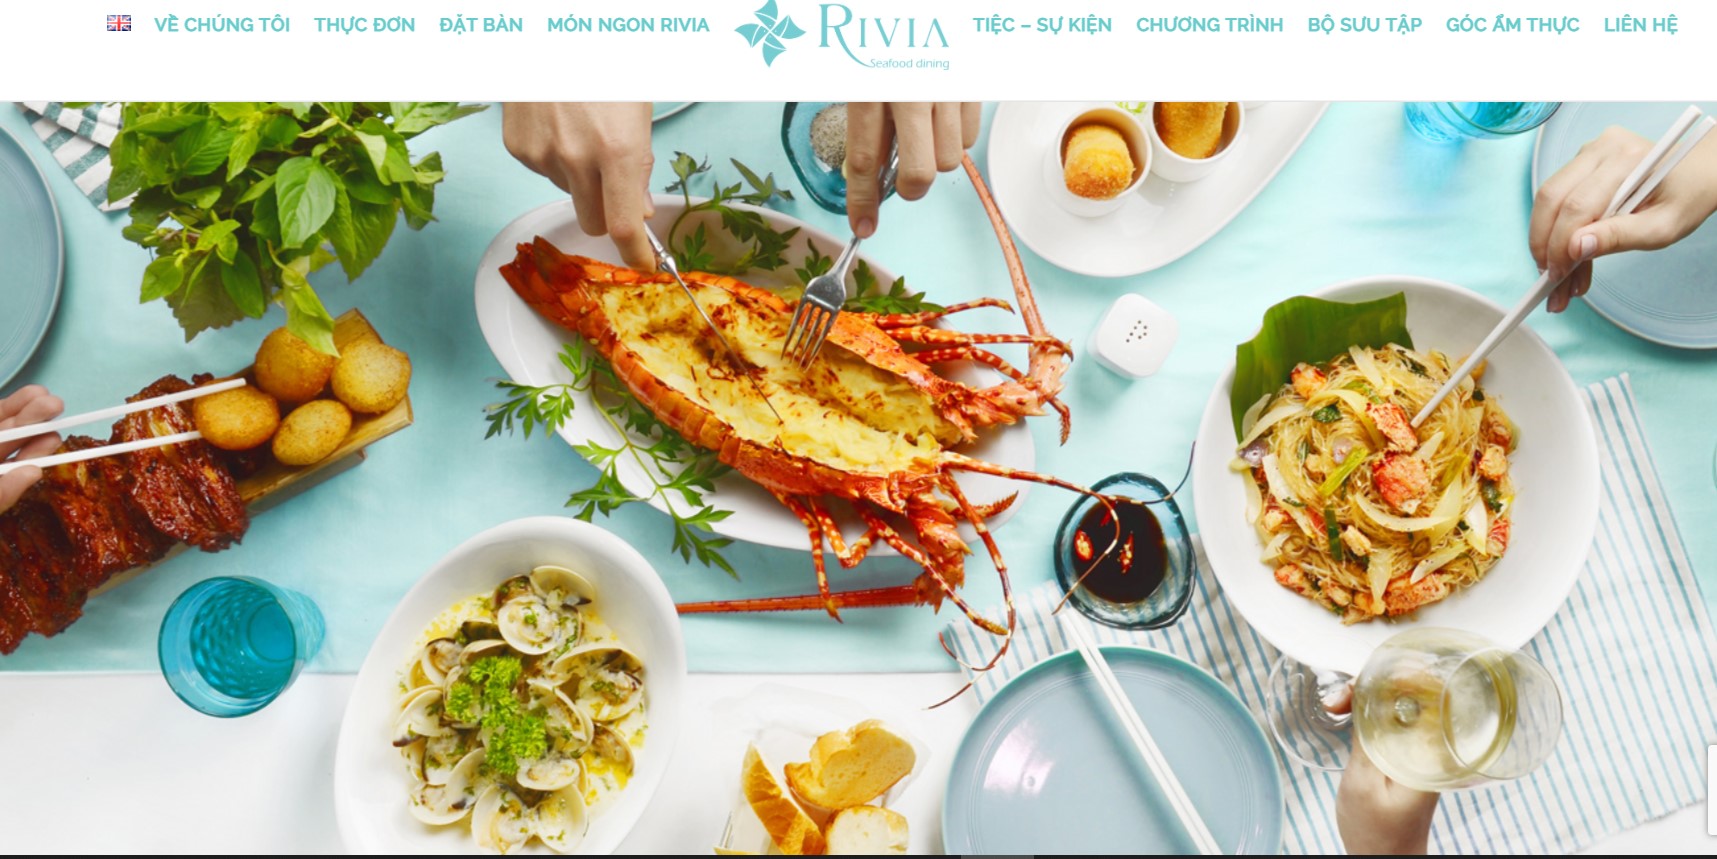 Rivia seafood dining